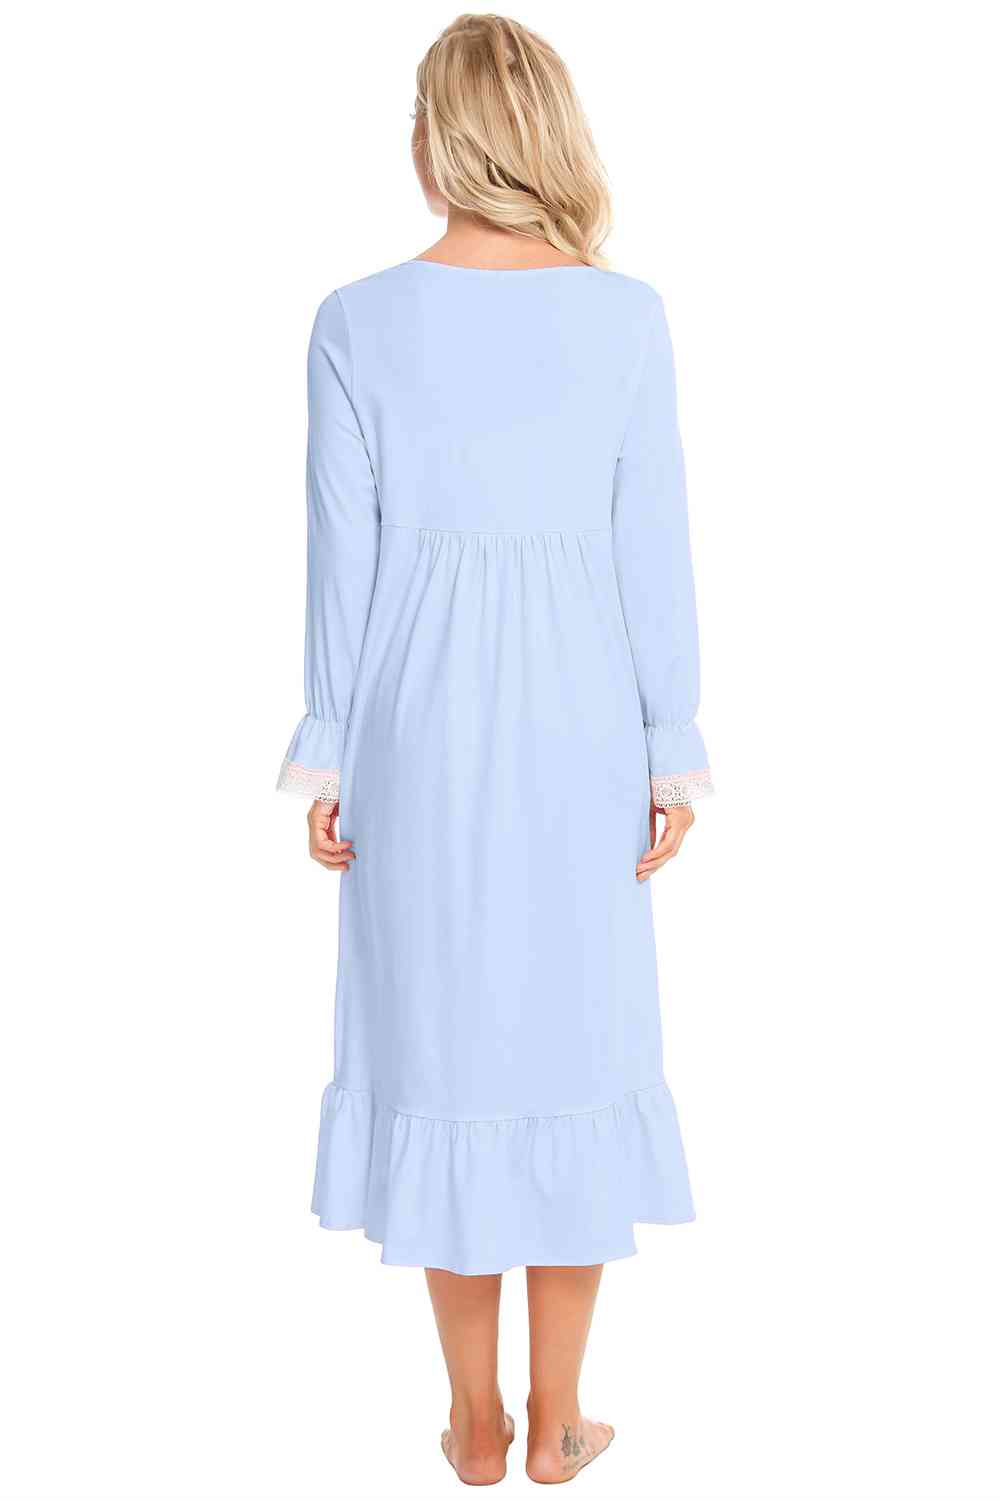 Lace Detail Square Neck Flounce Sleeve Night Dress - Opulence & Essence